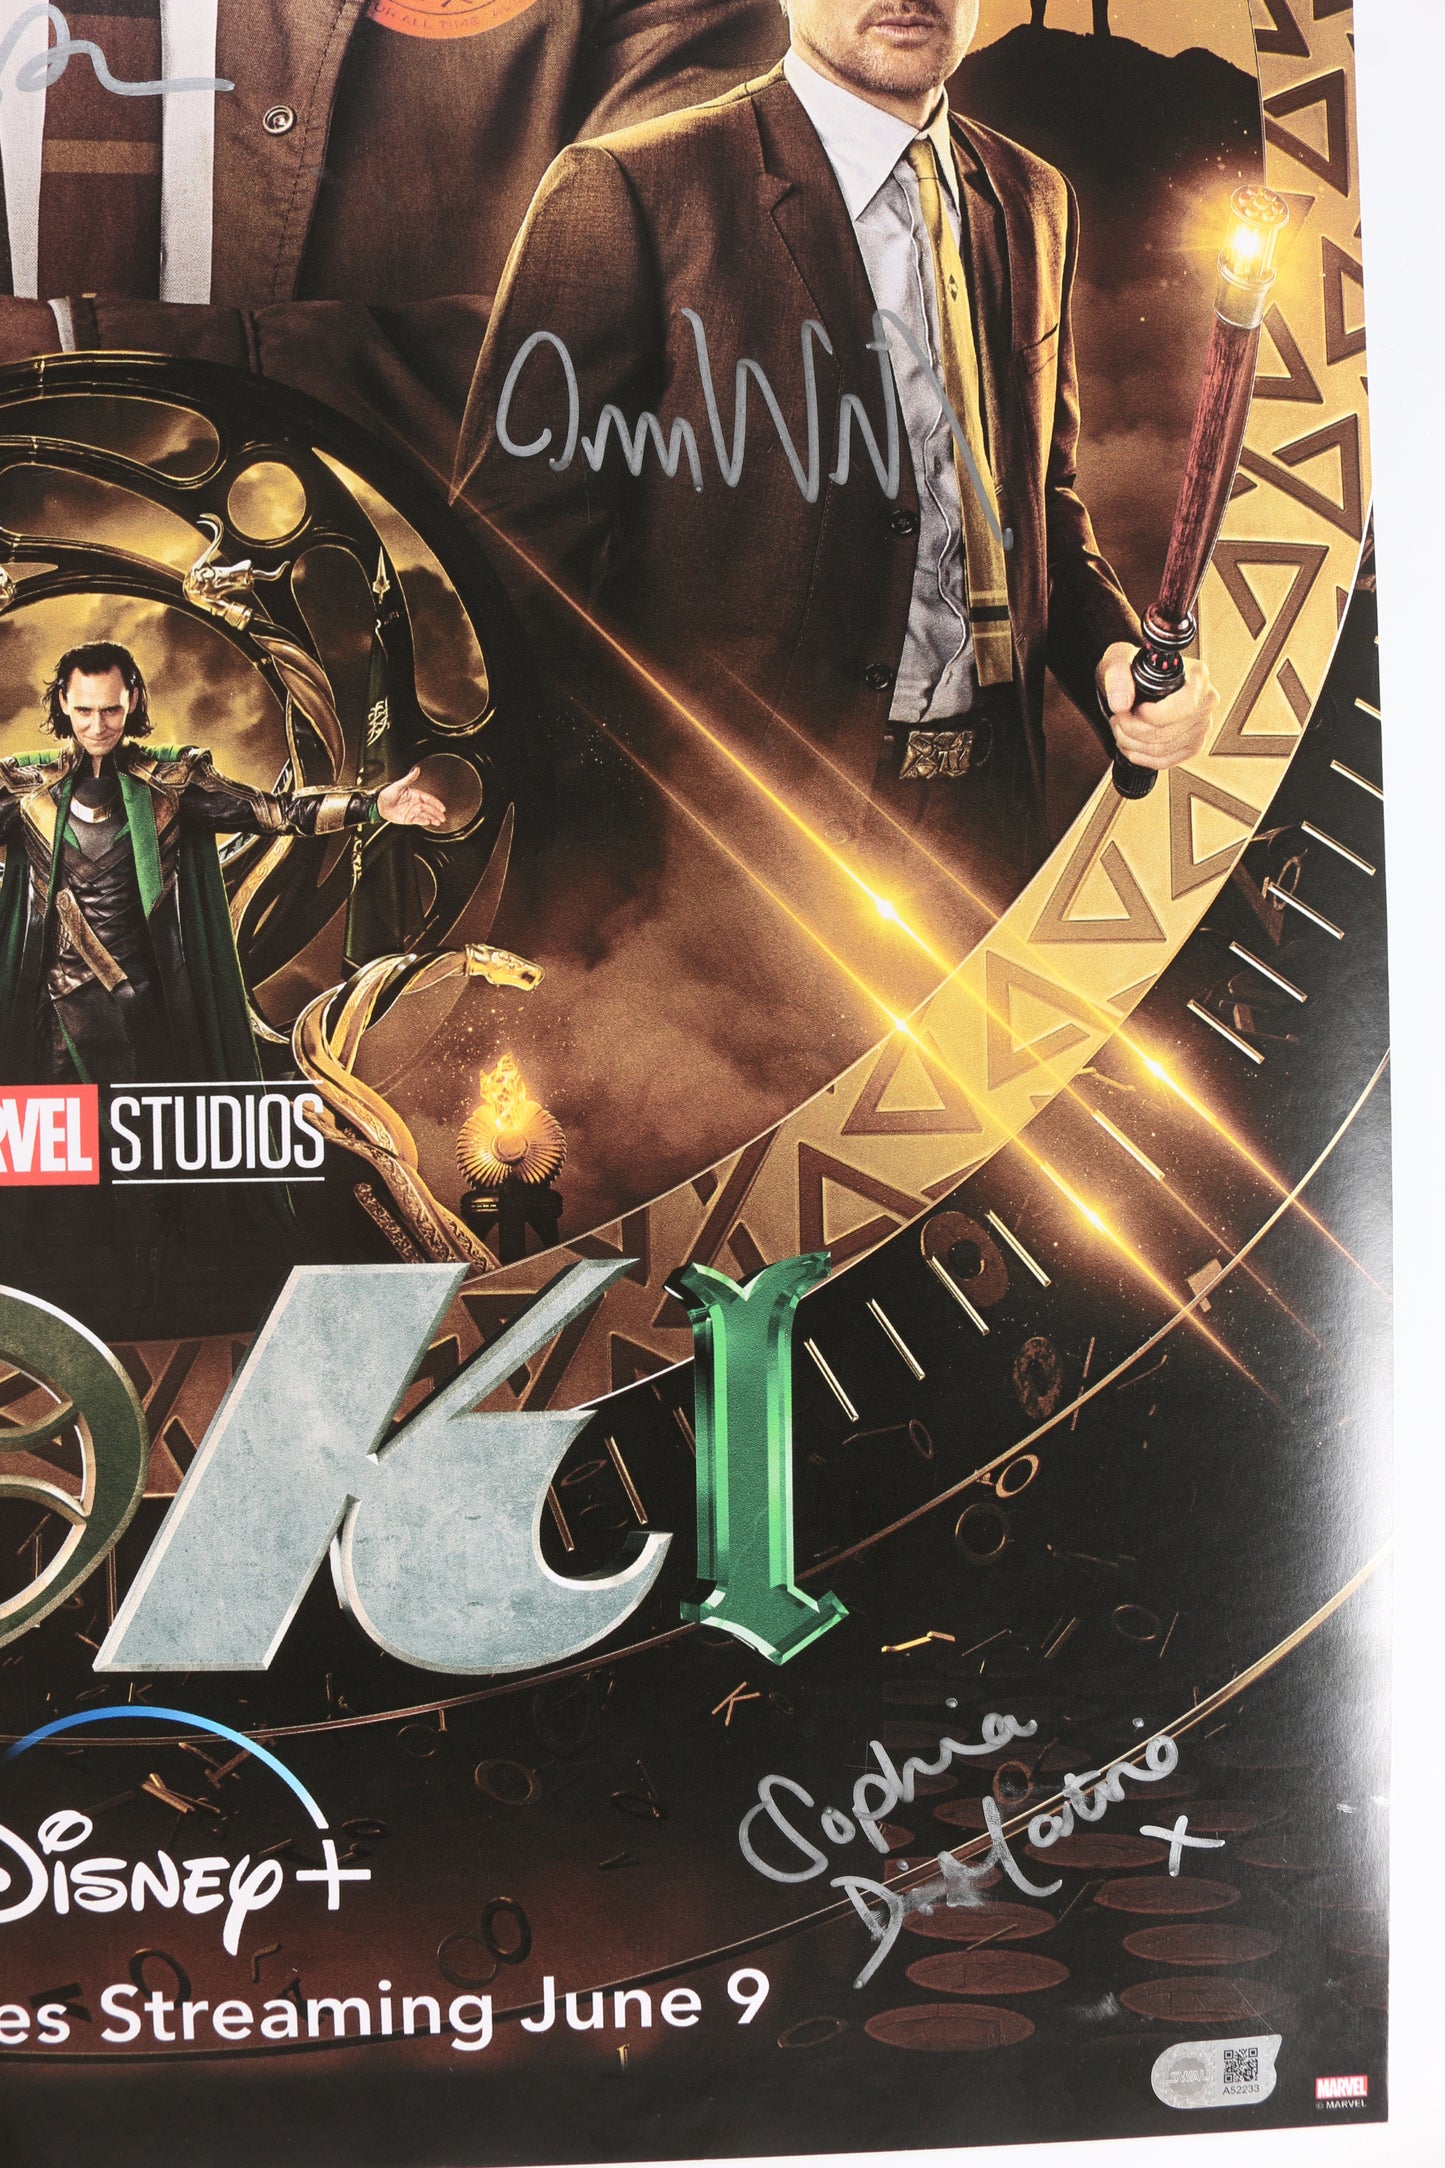 
                  
                    Loki 22x33.5 Poster (SWAU) Cast Signed by Tom Hiddleston, Owen Wilson, Sophia Di Martino, & Jonathan Majors
                  
                